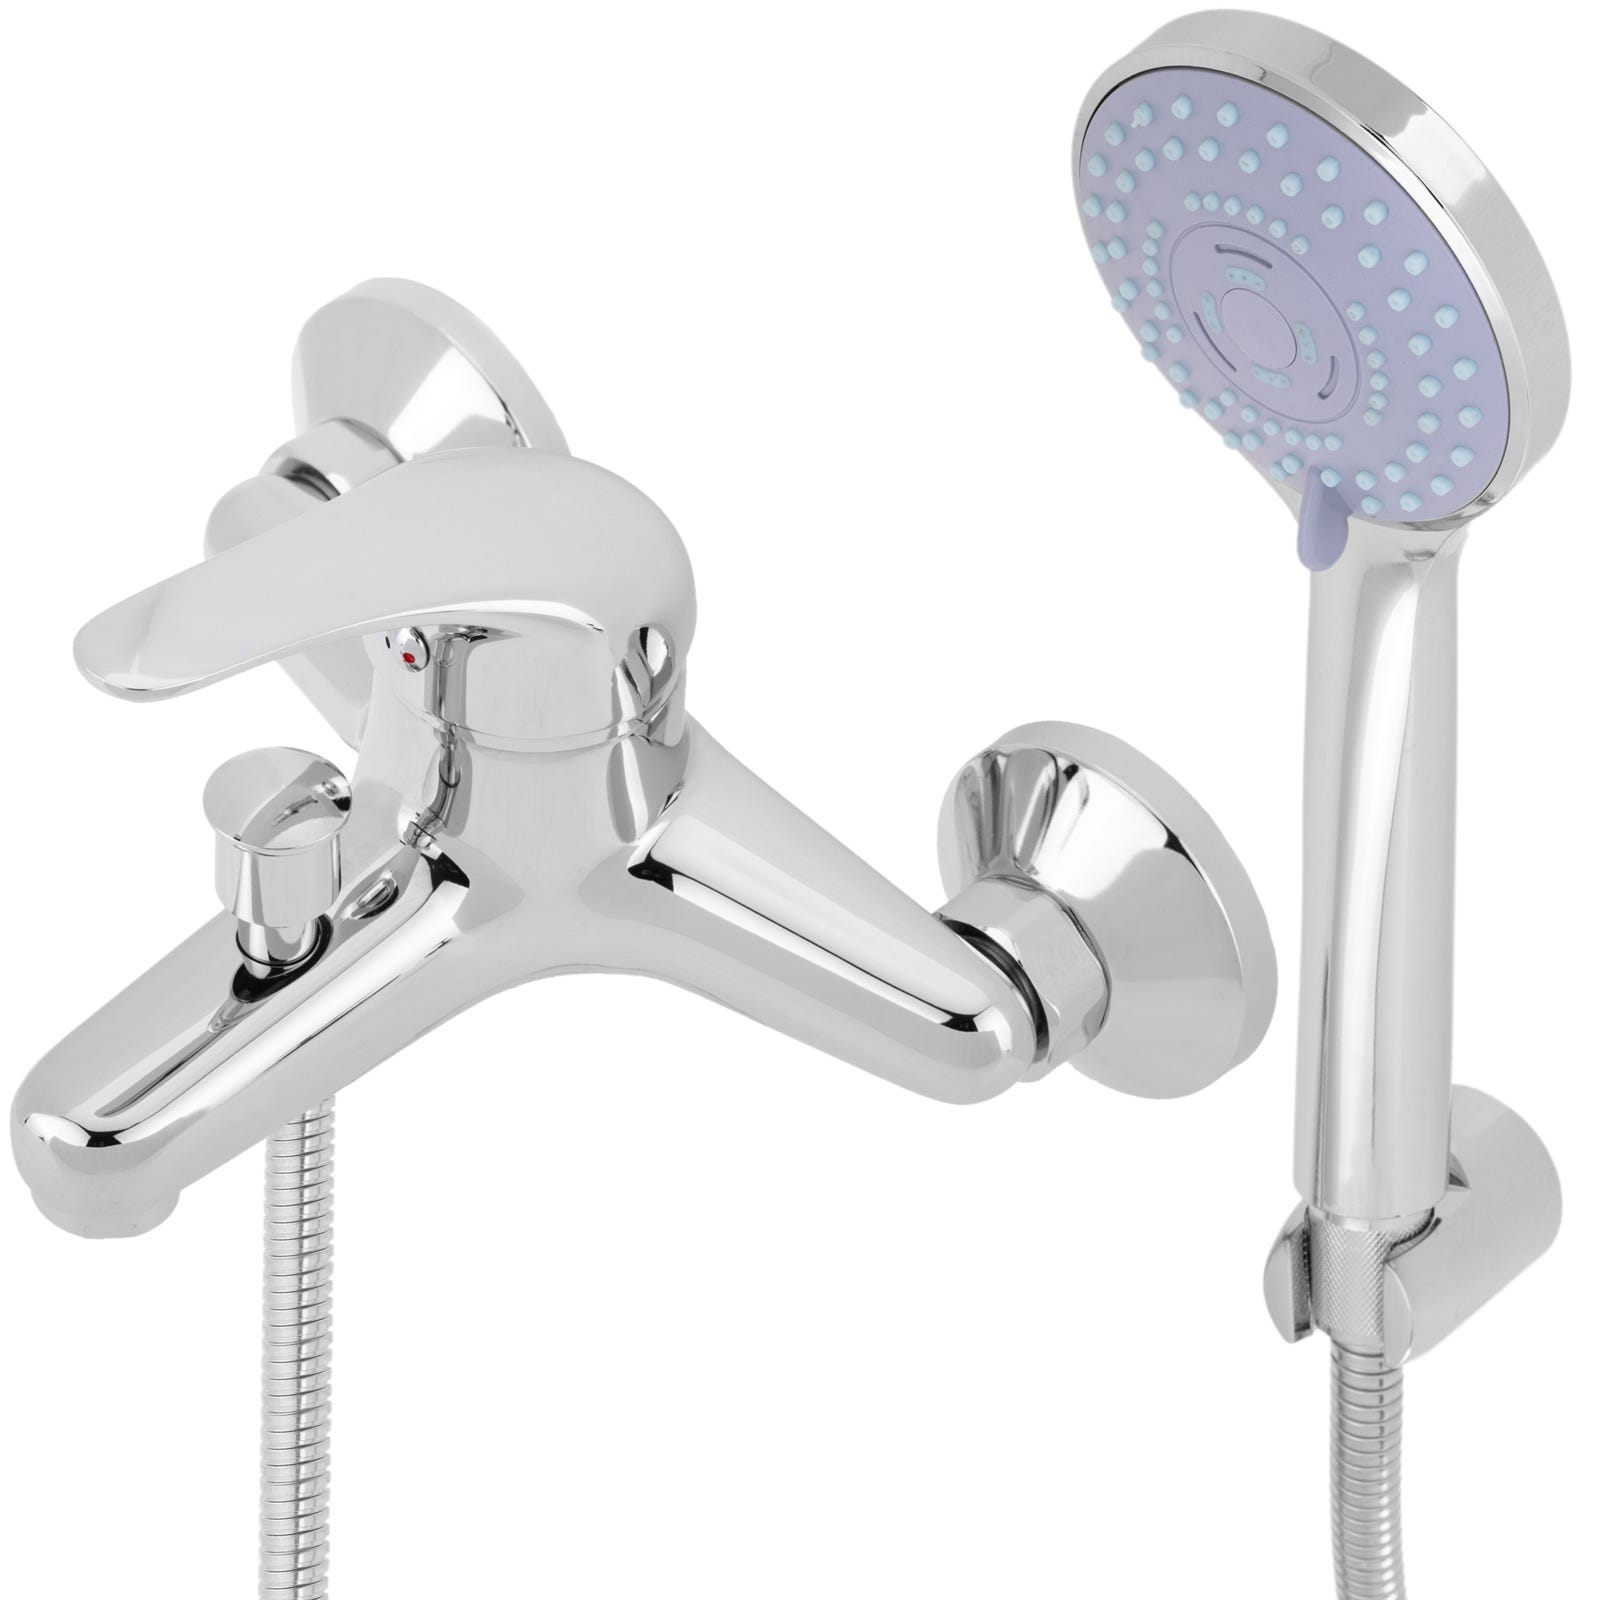 Grifo de ducha – Juego completo de grifos de ducha, sistema de ducha – Kit  de ducha al aire libre/ducha al aire libre/accesorios de ducha al aire